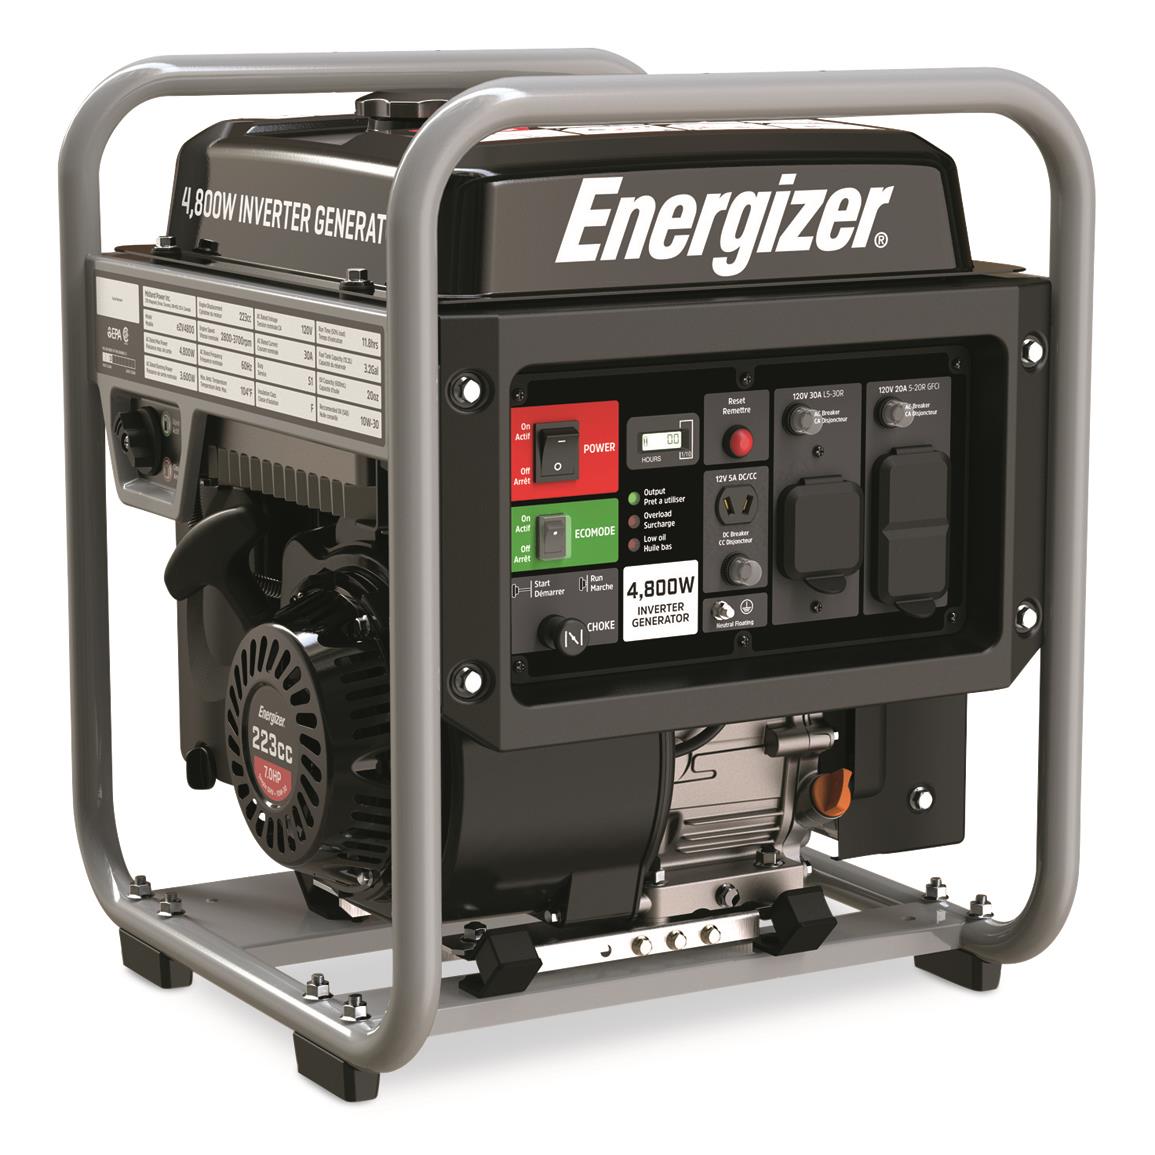 Energizer 4,800W Gasoline Inverter Generator